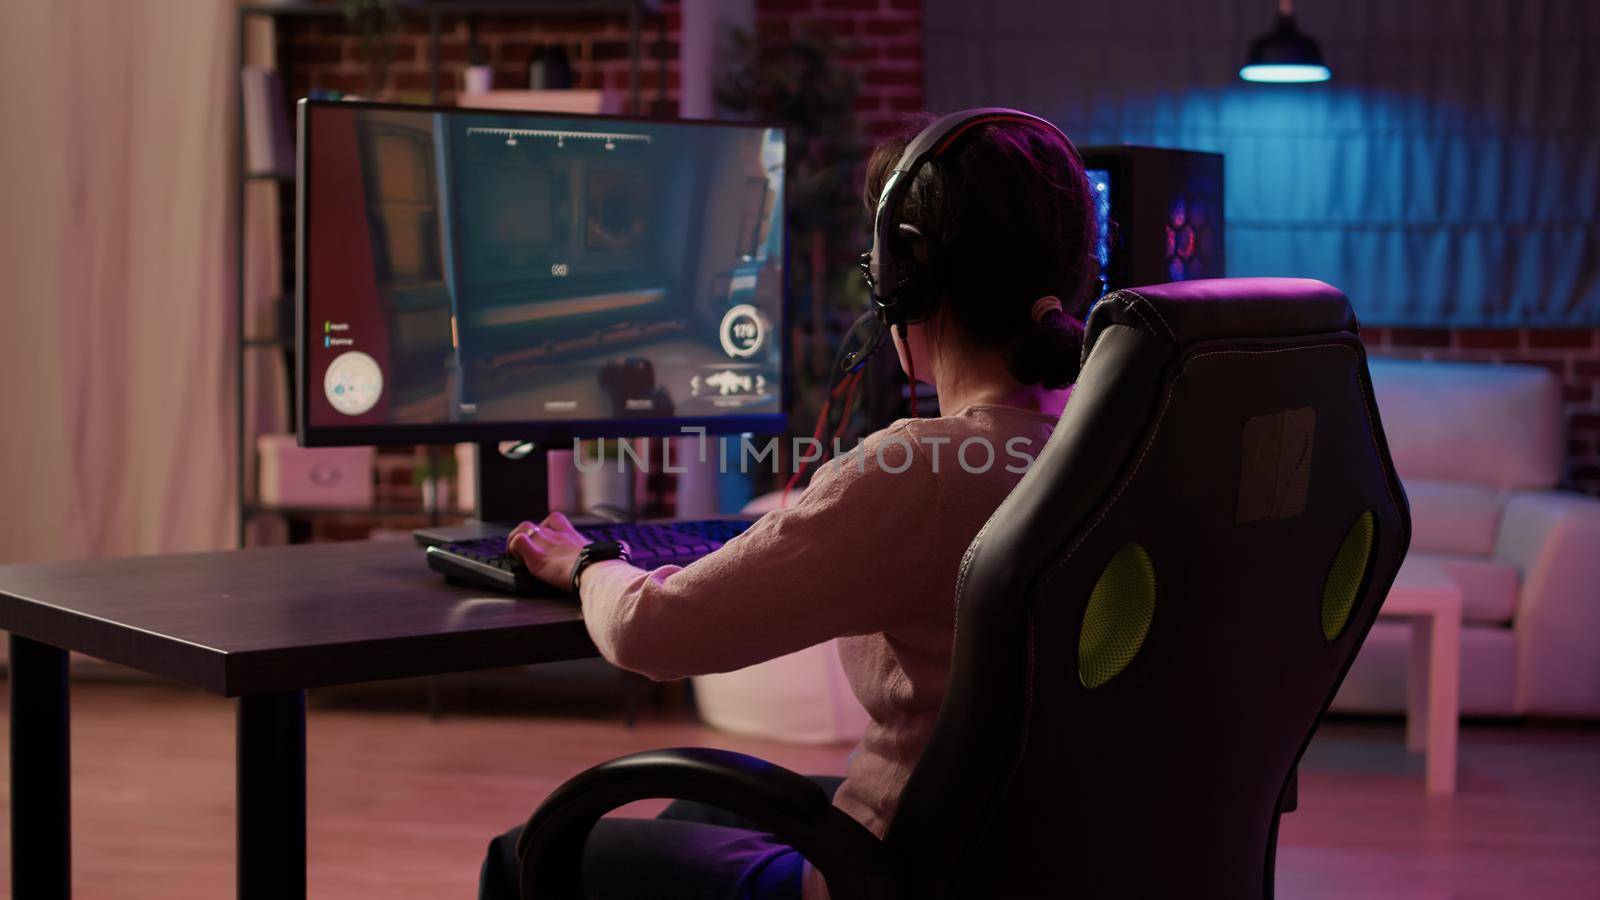 Gamer girl using pc gaming setup relaxing playing multiplayer online action game talking using headset by DCStudio